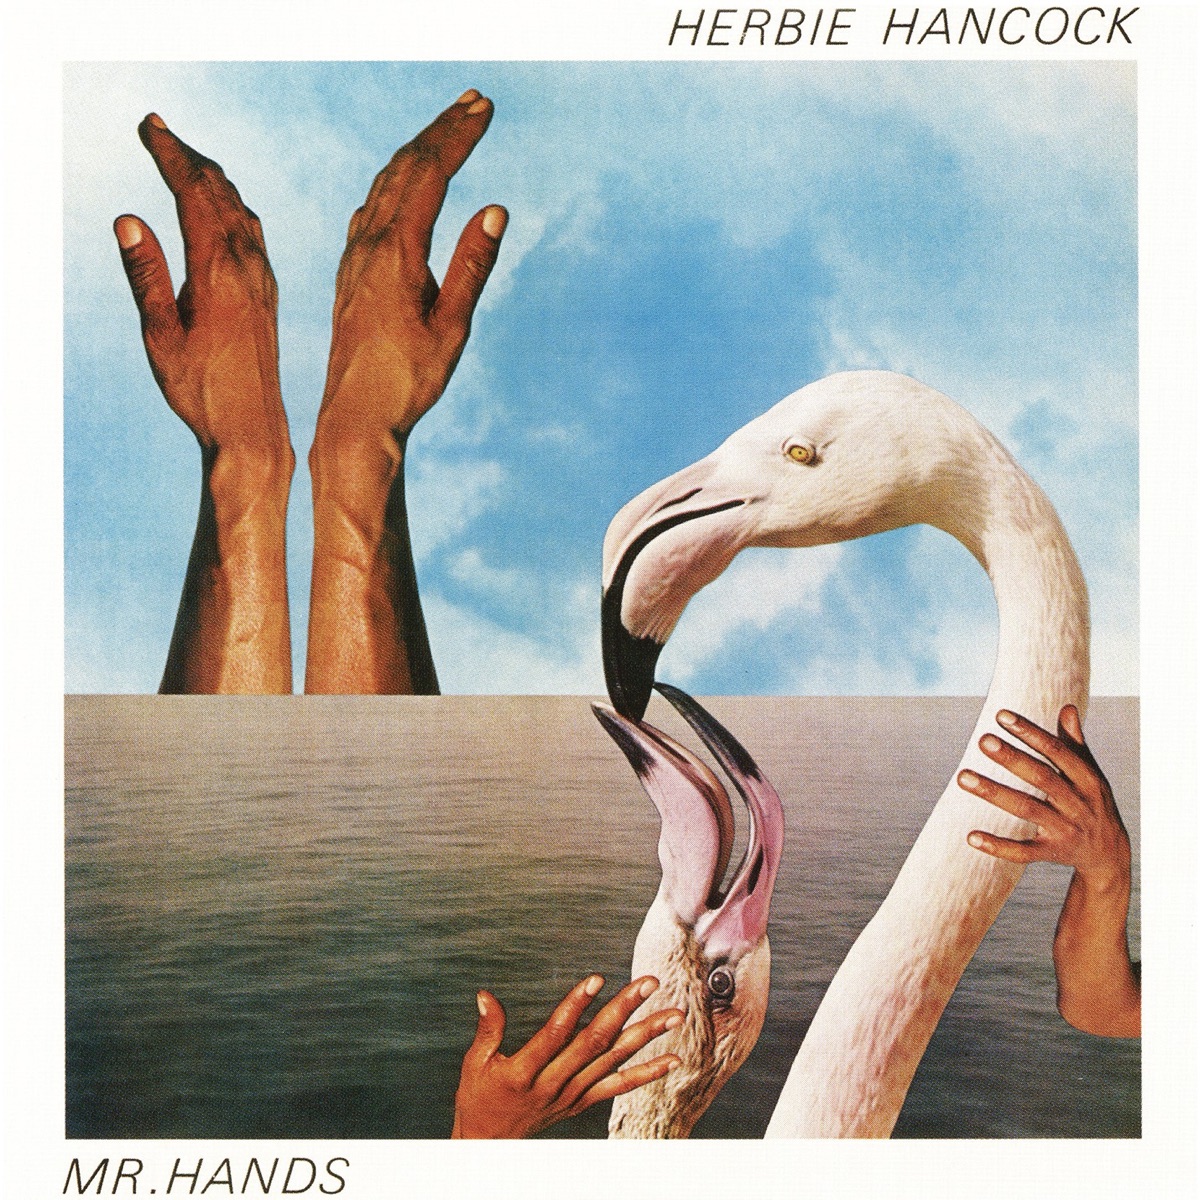 Mr. Hands by Herbie Hancock on Apple Music